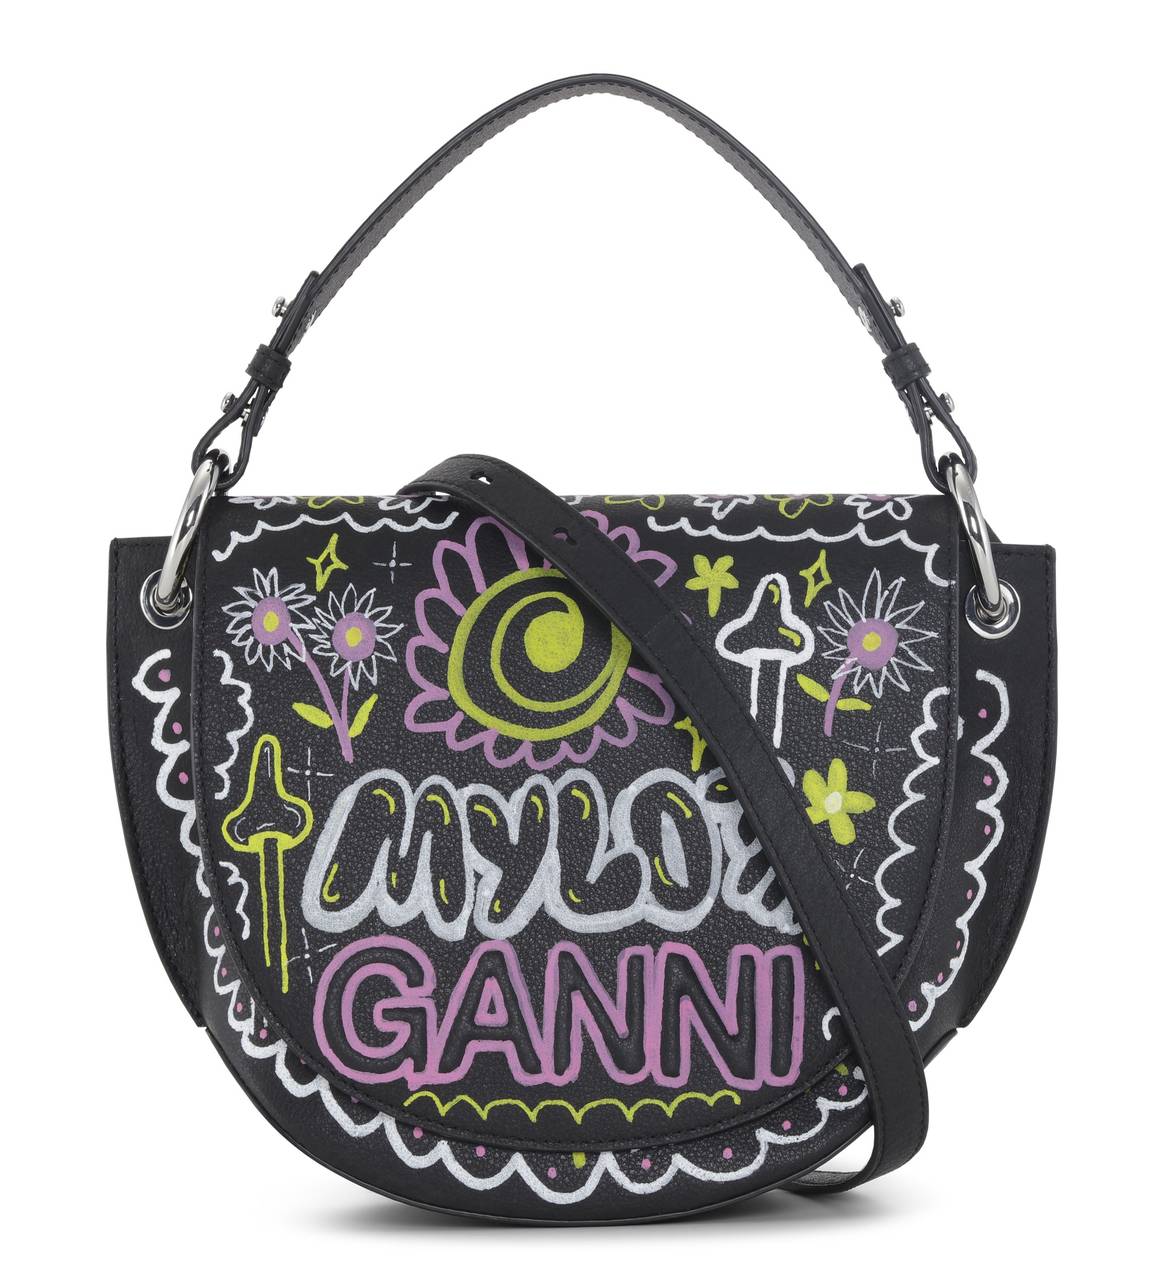 Ganni x Bolt Threads saddle bag made with Mylo. Image: Ganni